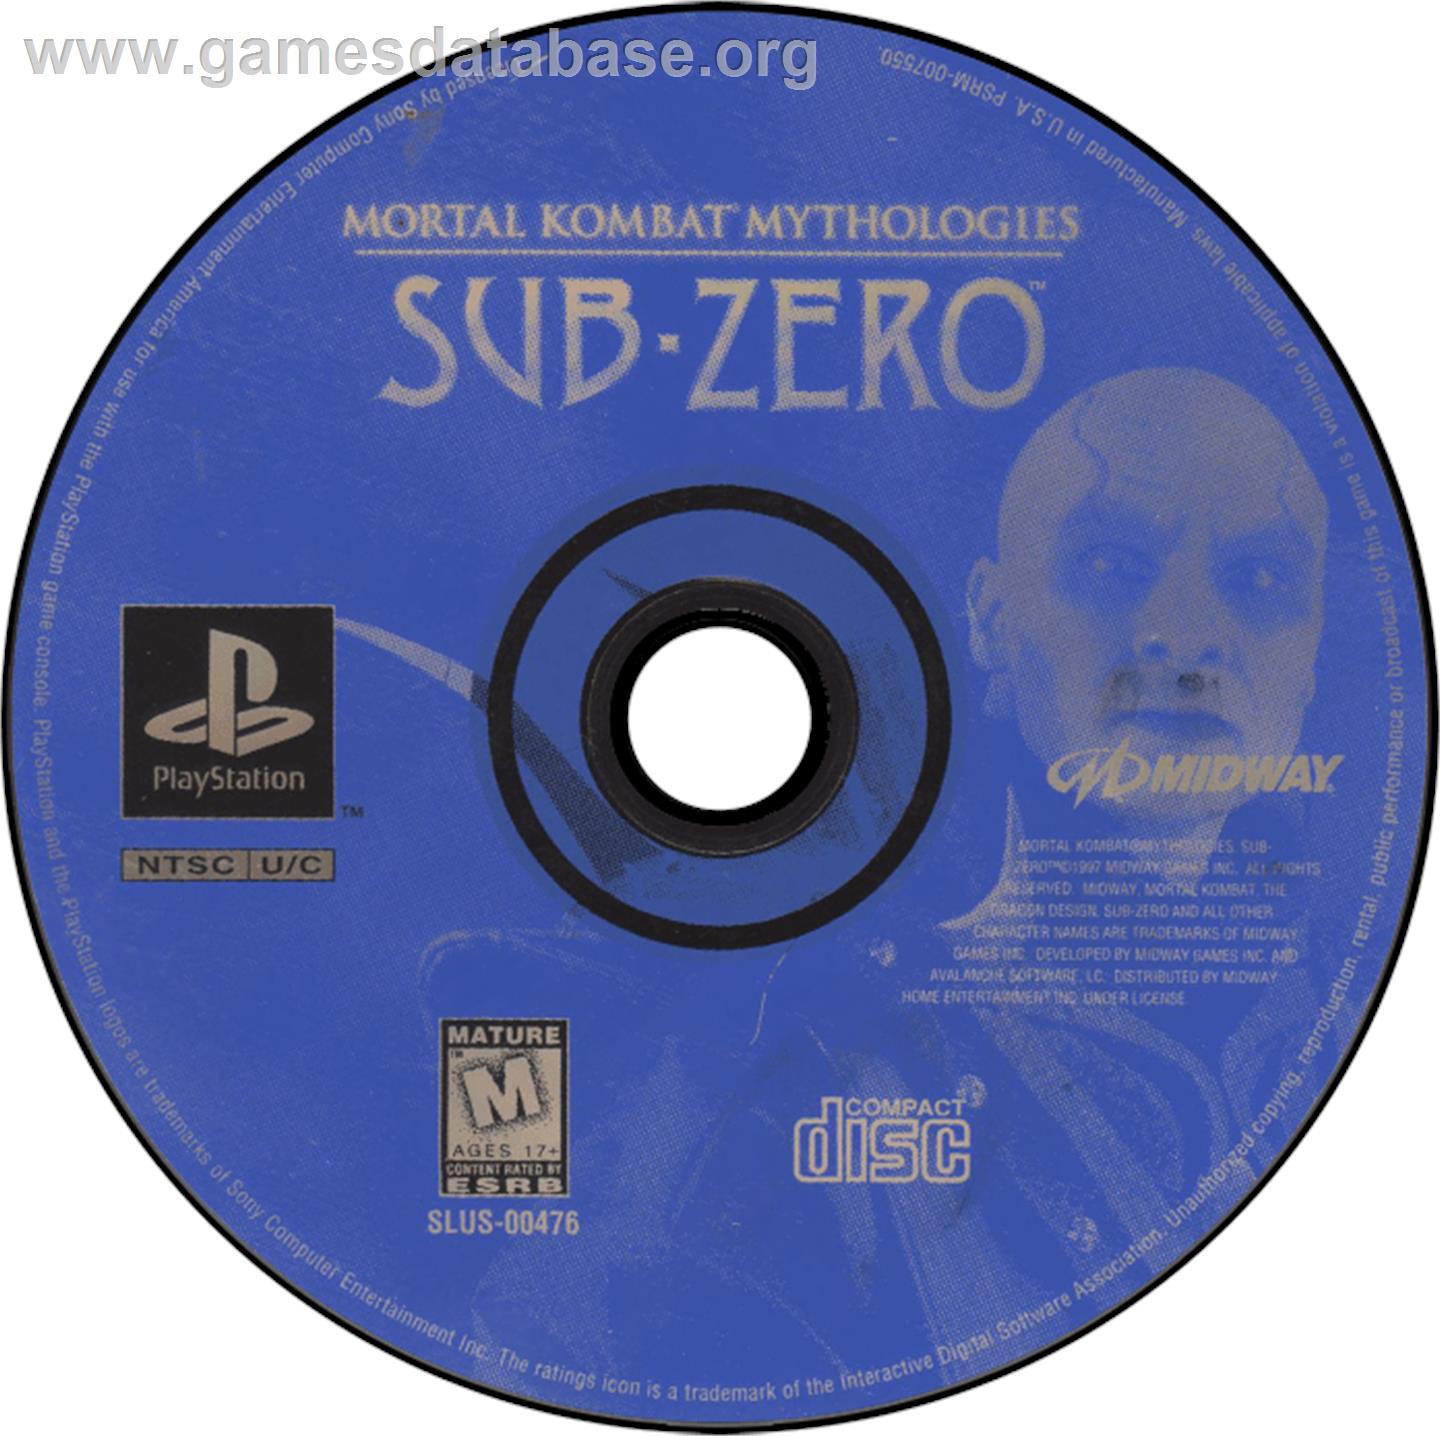 Mortal Kombat Mythologies: Sub-Zero - Sony Playstation - Artwork - Disc